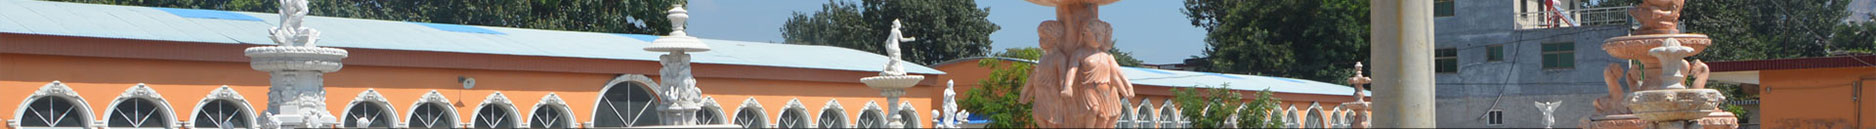 White Marble Wall Fountain with Statuary Garden Decor for Sale MOKK-758